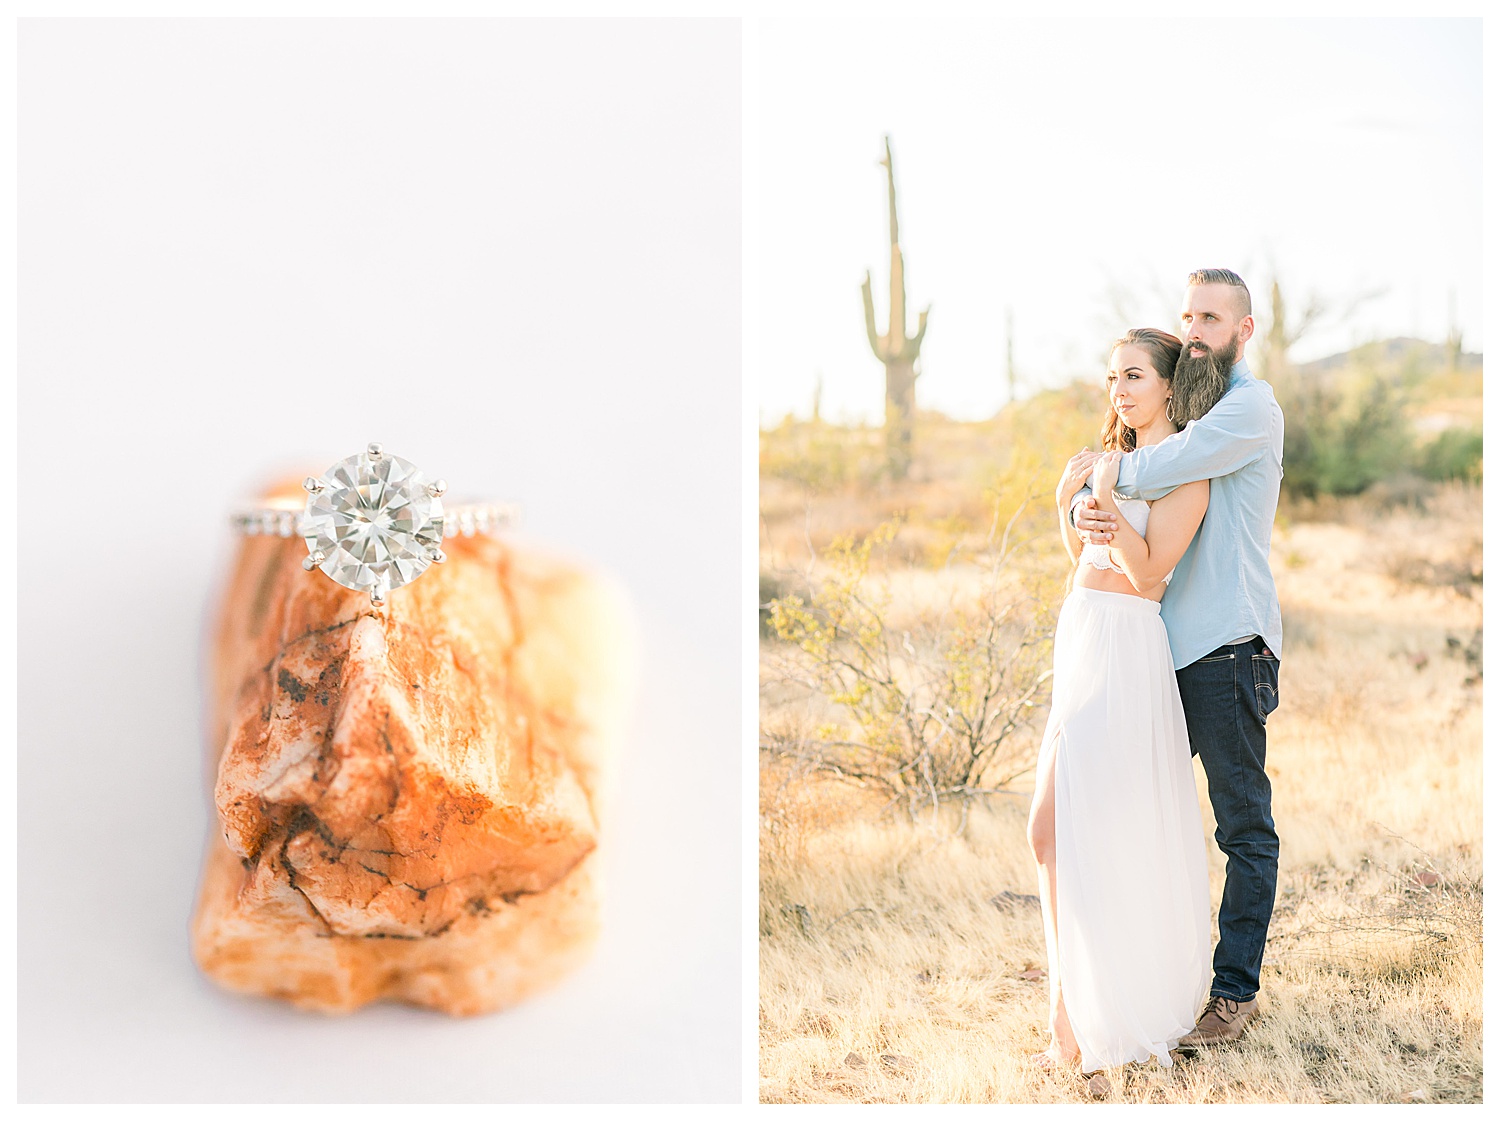 Desert Engagement Session, Phoenix Wedding Photographer, Engagement Session Outfits, White Dress, Jeans, Button Up Shirt Cactus, Saguaro Cactus, engagement ring